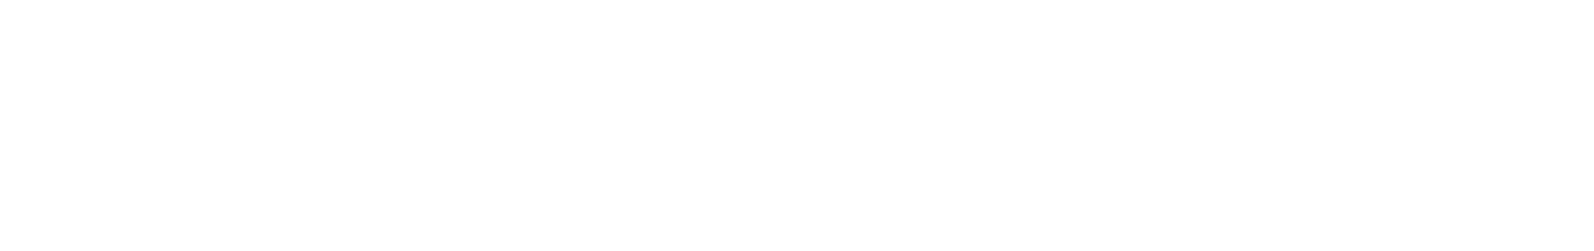 Allied Group Limited logo grand pour les fonds sombres (PNG transparent)